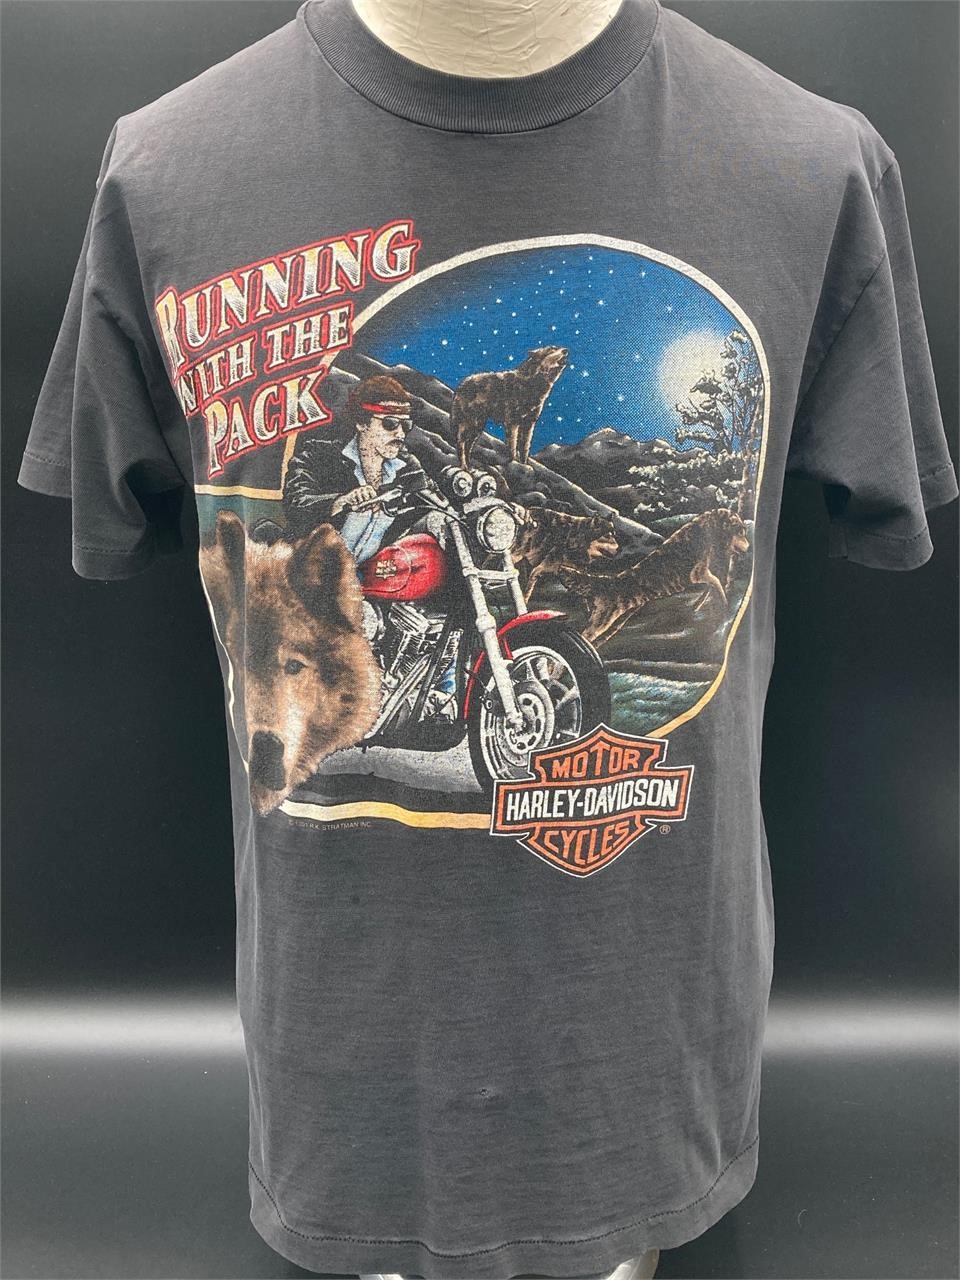 Vintage Harley Davidson T-Shirt Auction